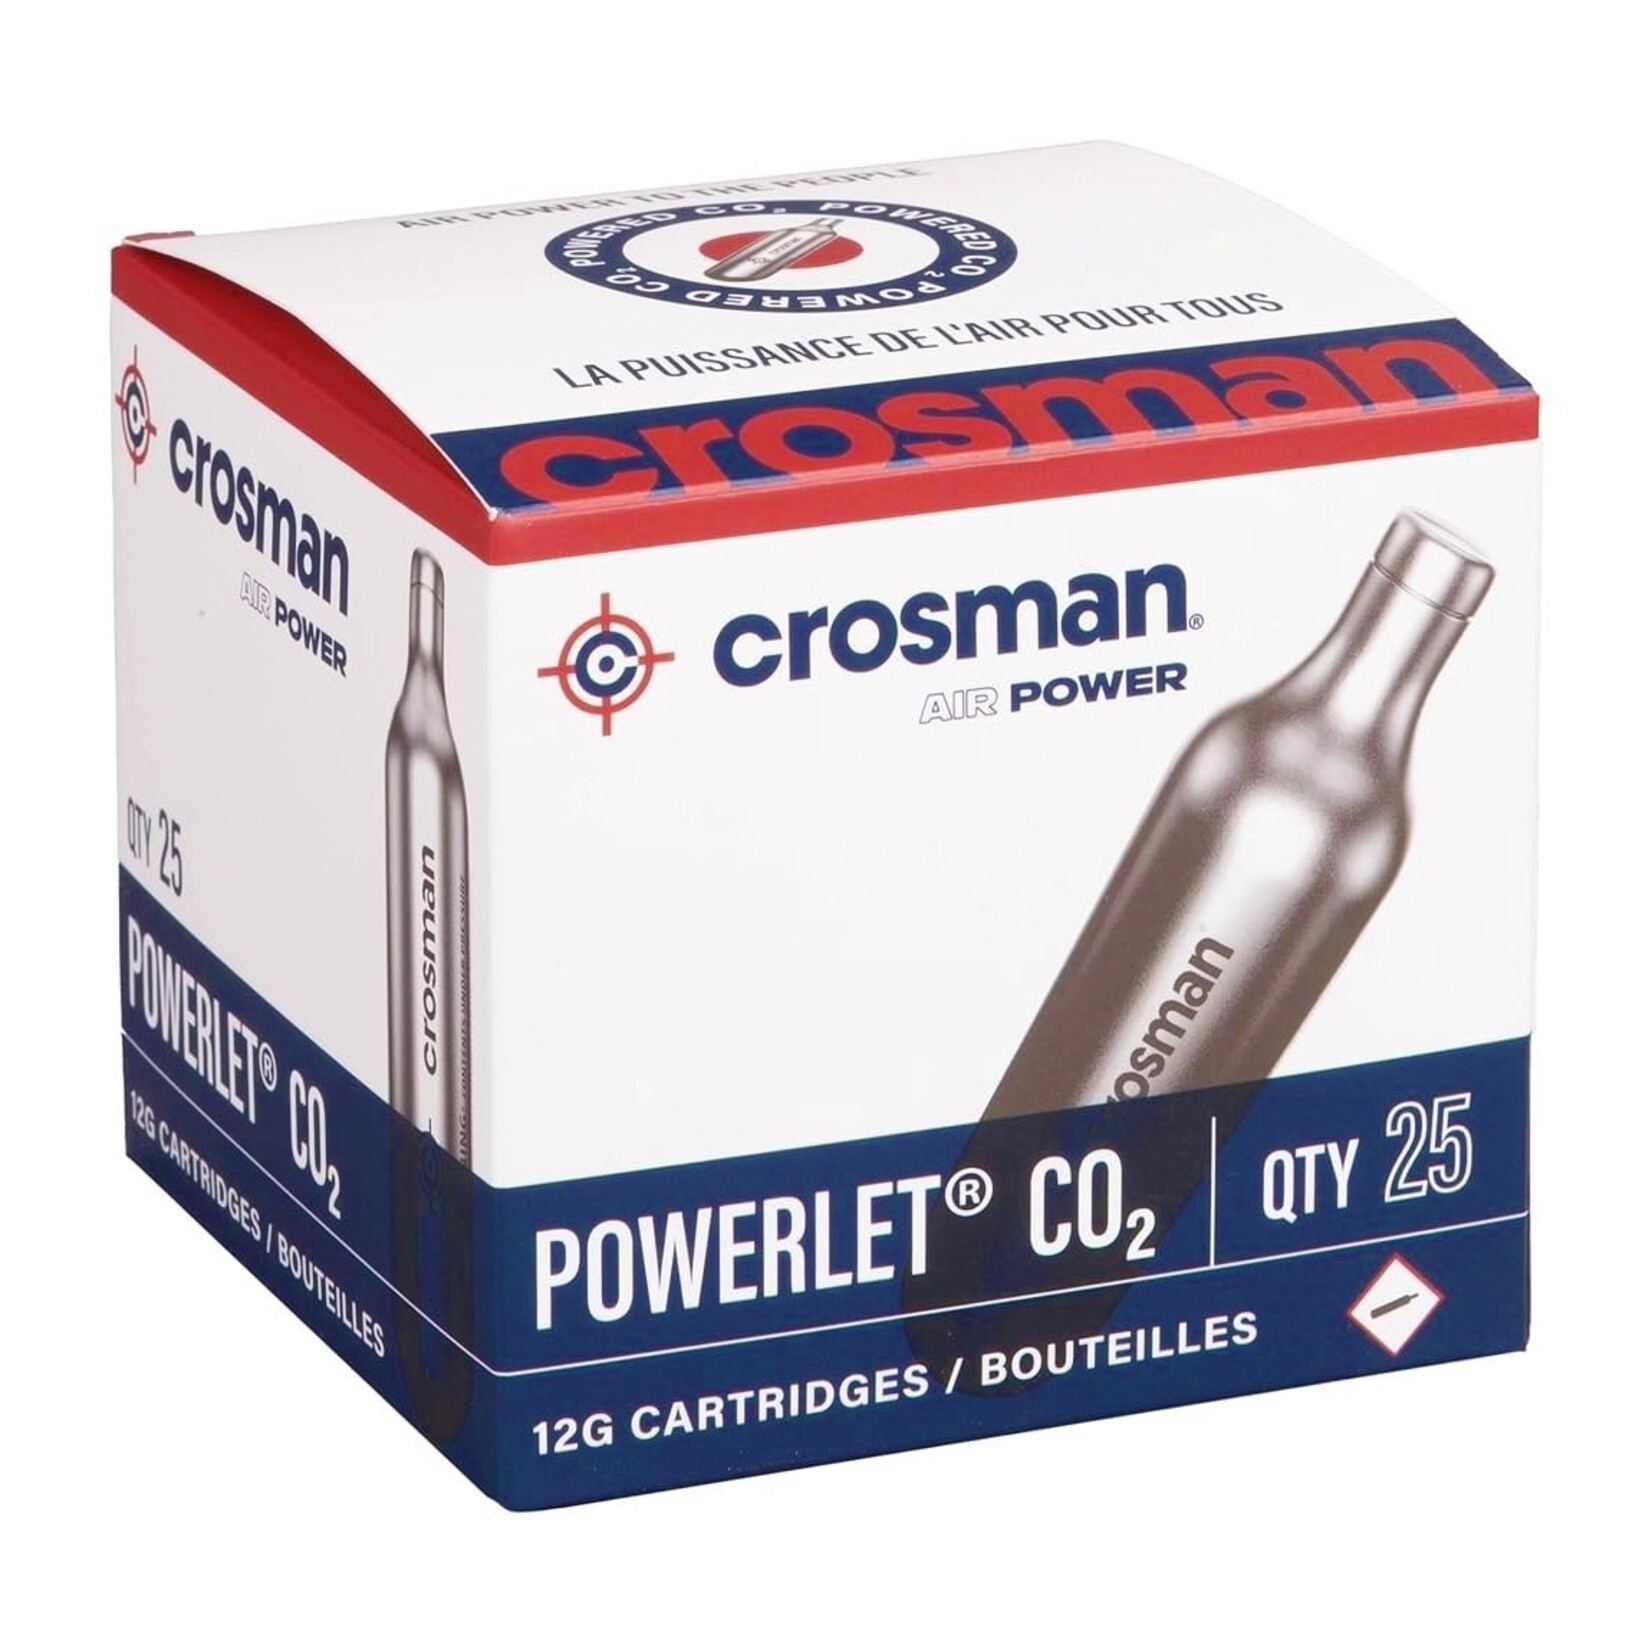 crosman Crosman Co2 Powerlet Cartridges